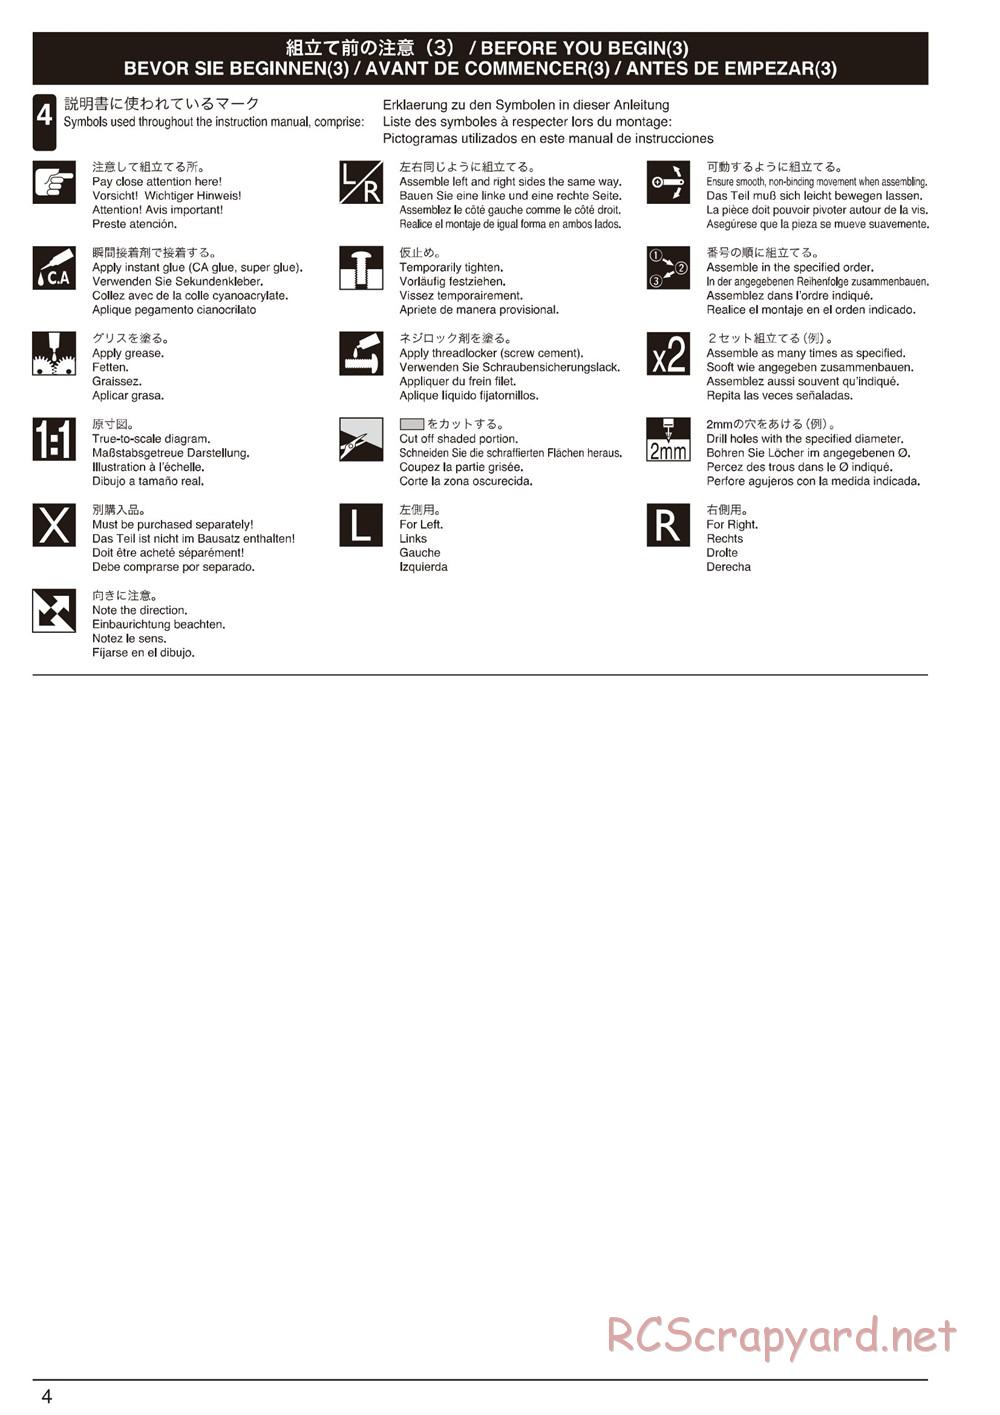 Kyosho - Ultima-SC - Manual - Page 4